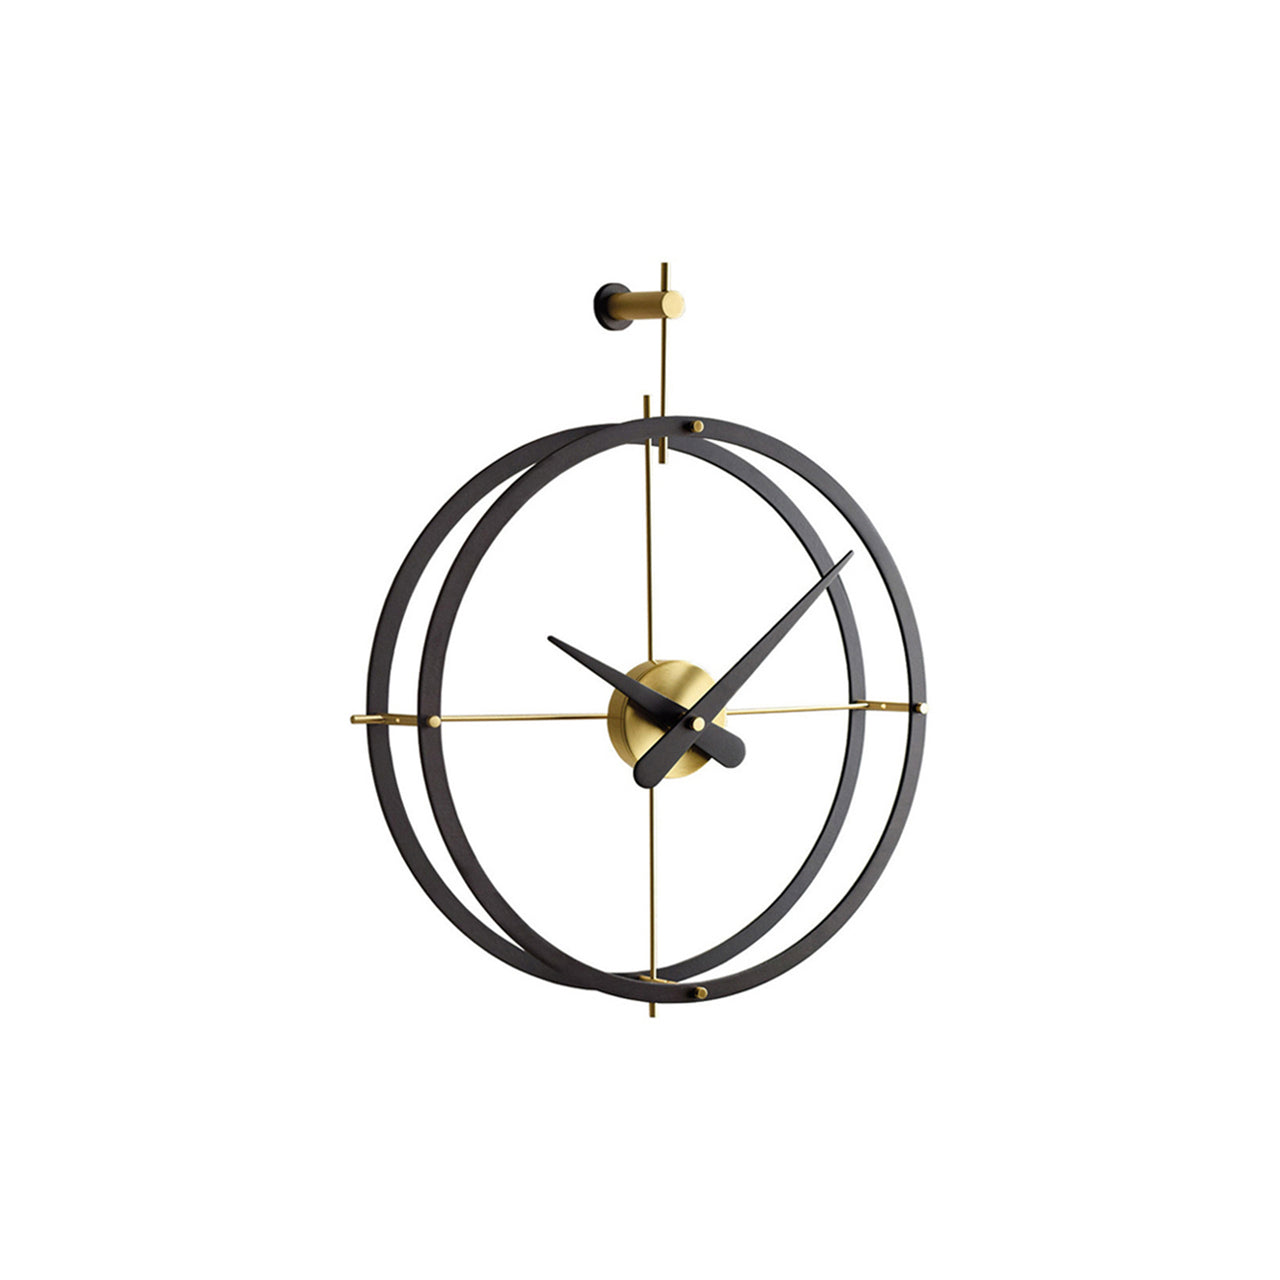 Dos Puntos Wall Clock: Wenge + Polished Brass